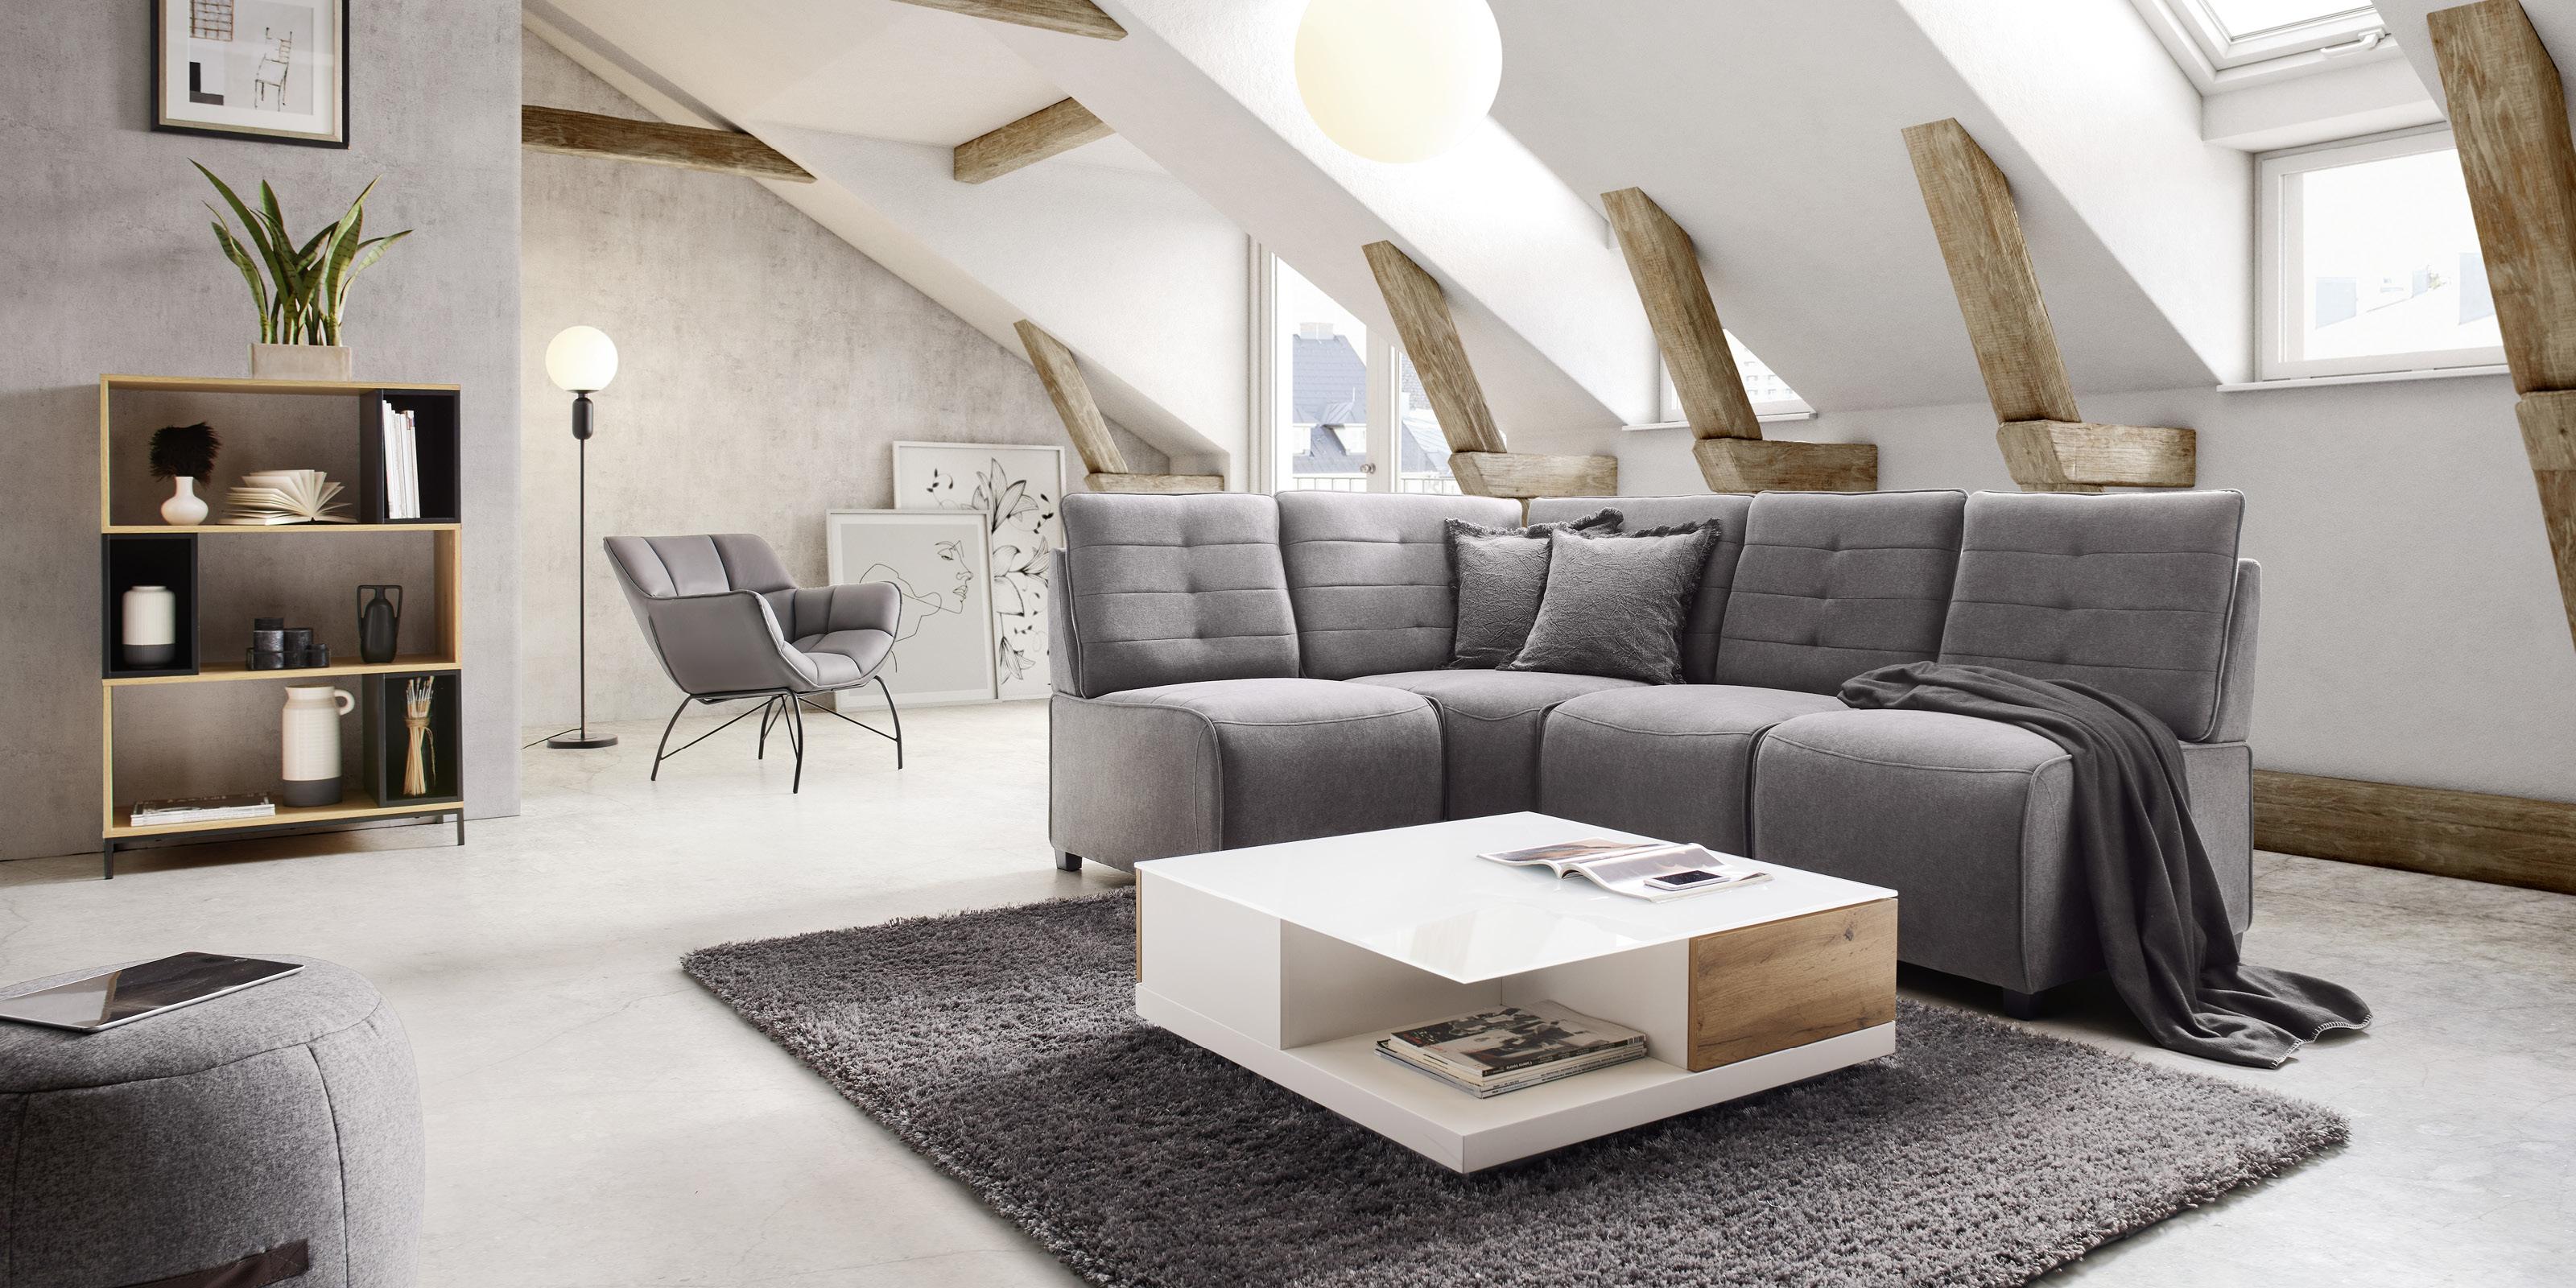 malá béžová rohová sedačka v moderním obývacím pokoji